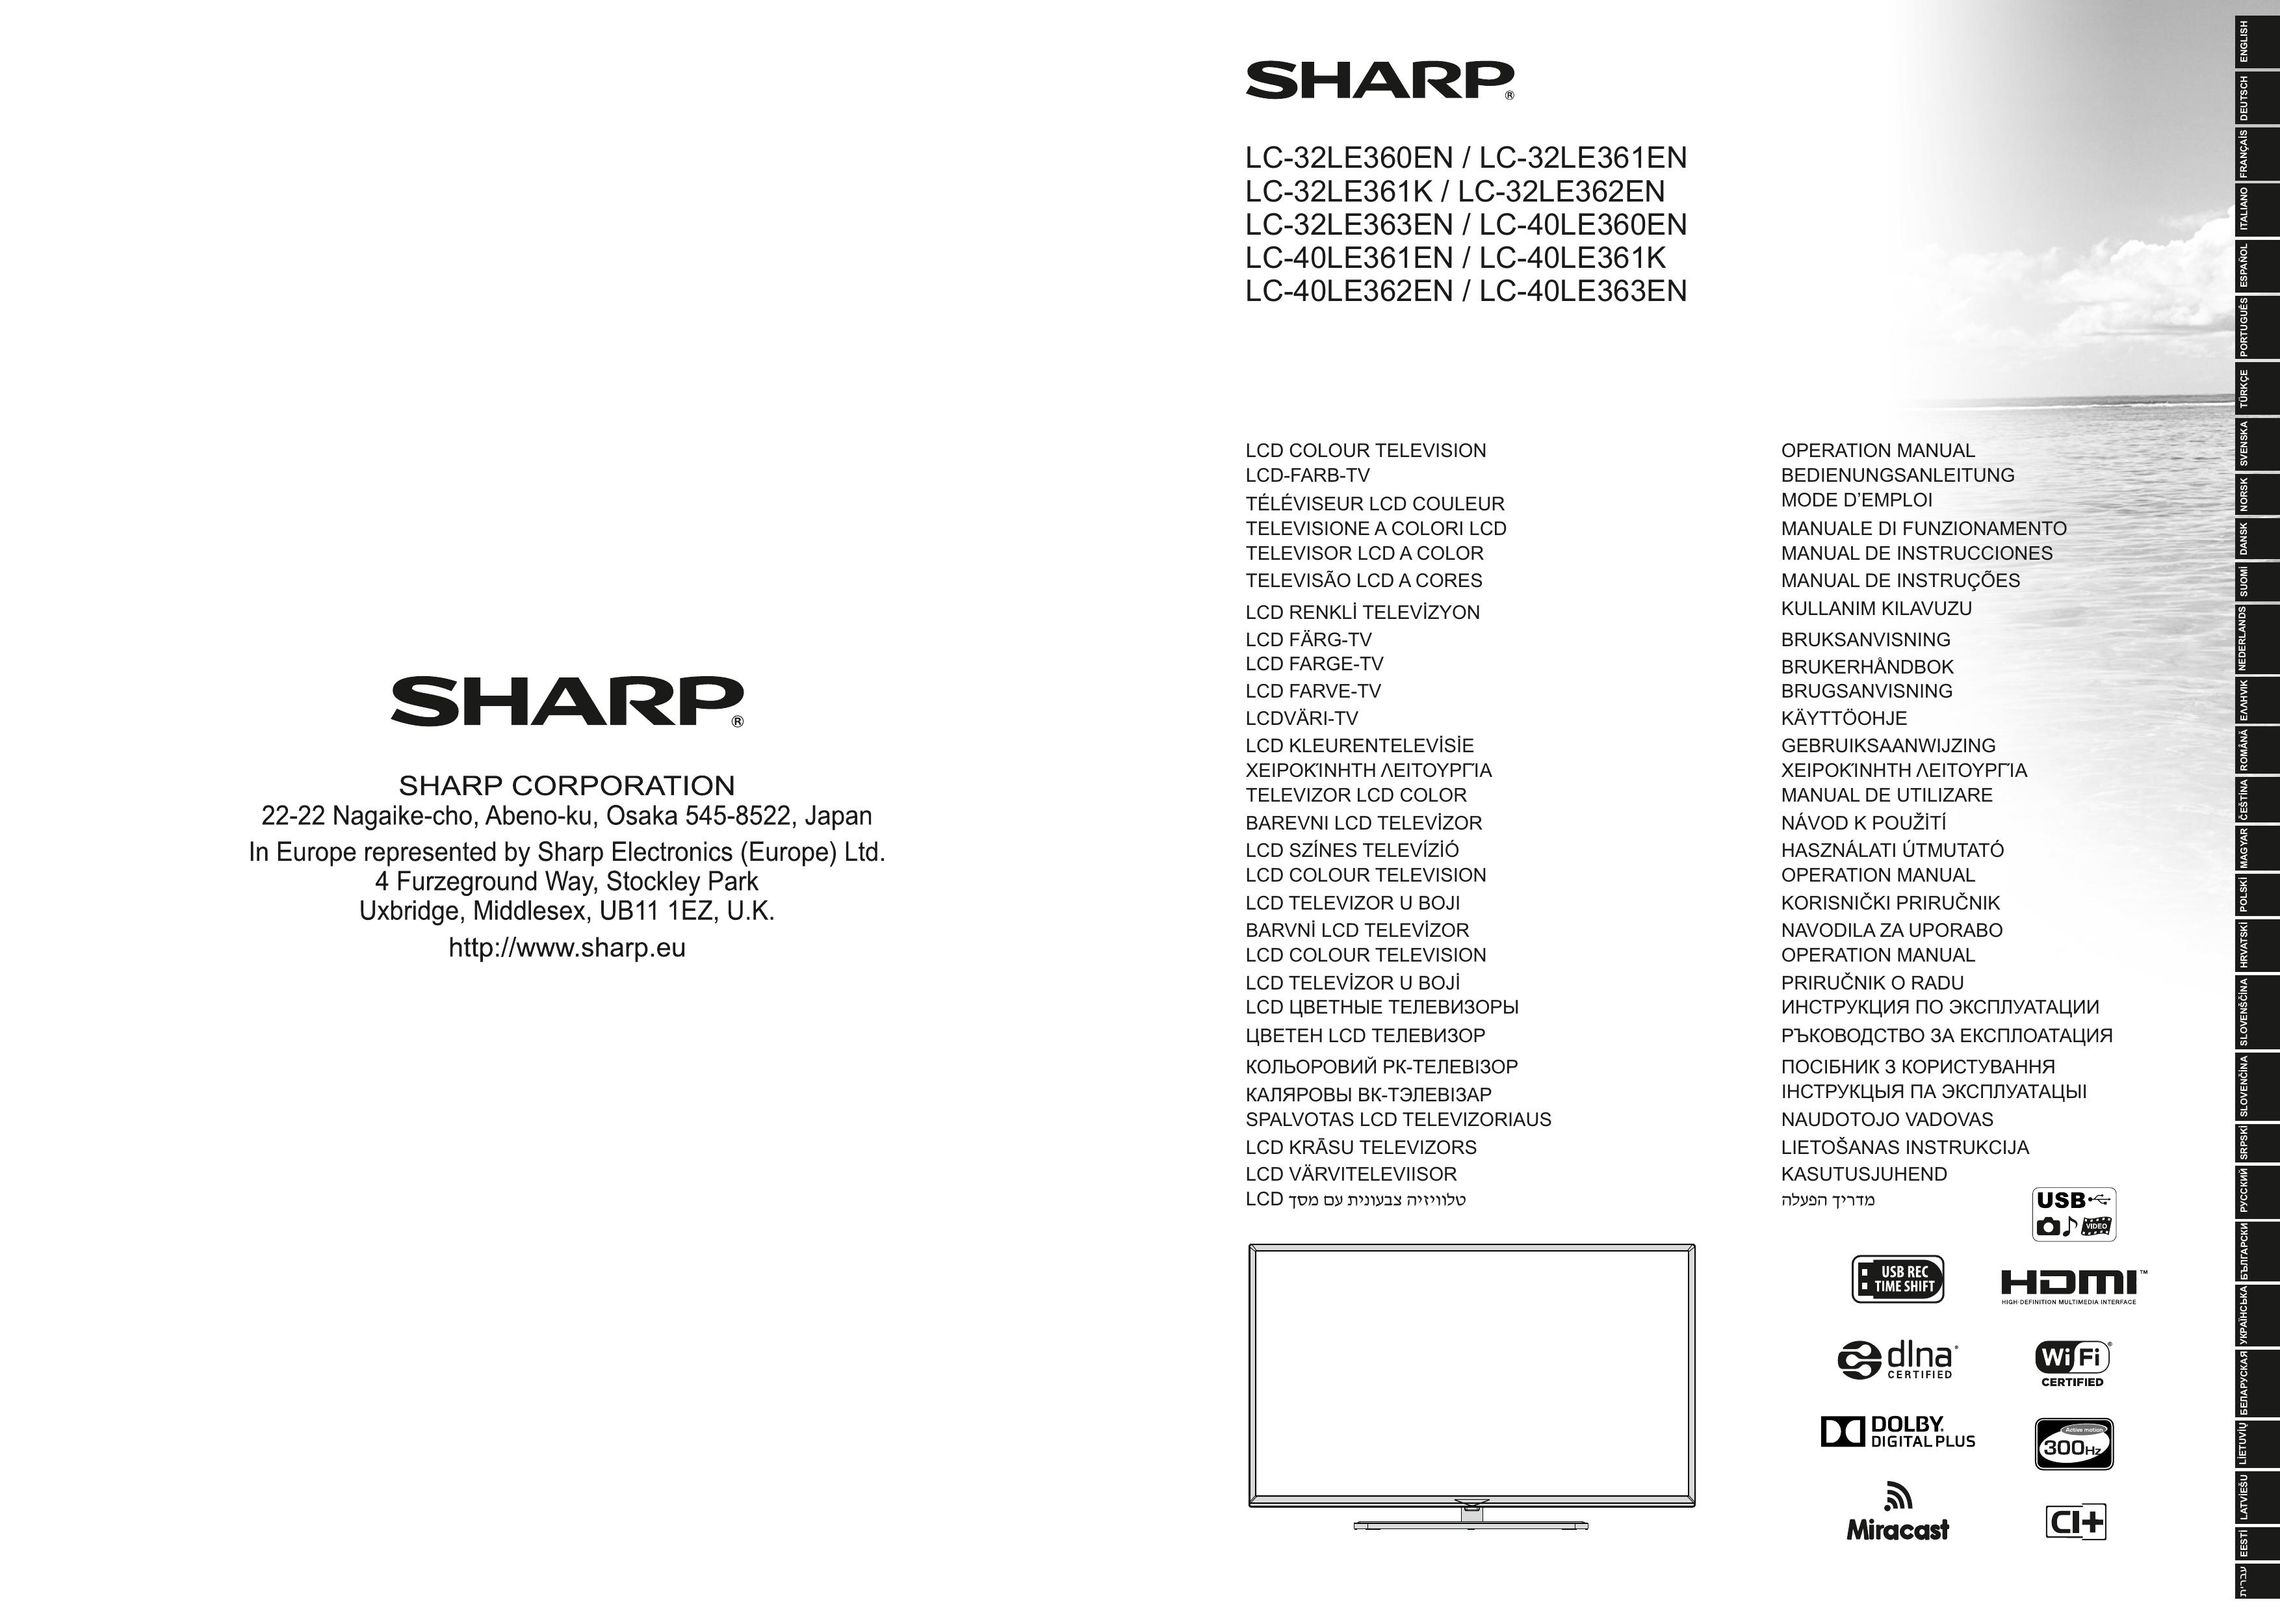 Sharp C-40LE362EN Flat Panel Television User Manual